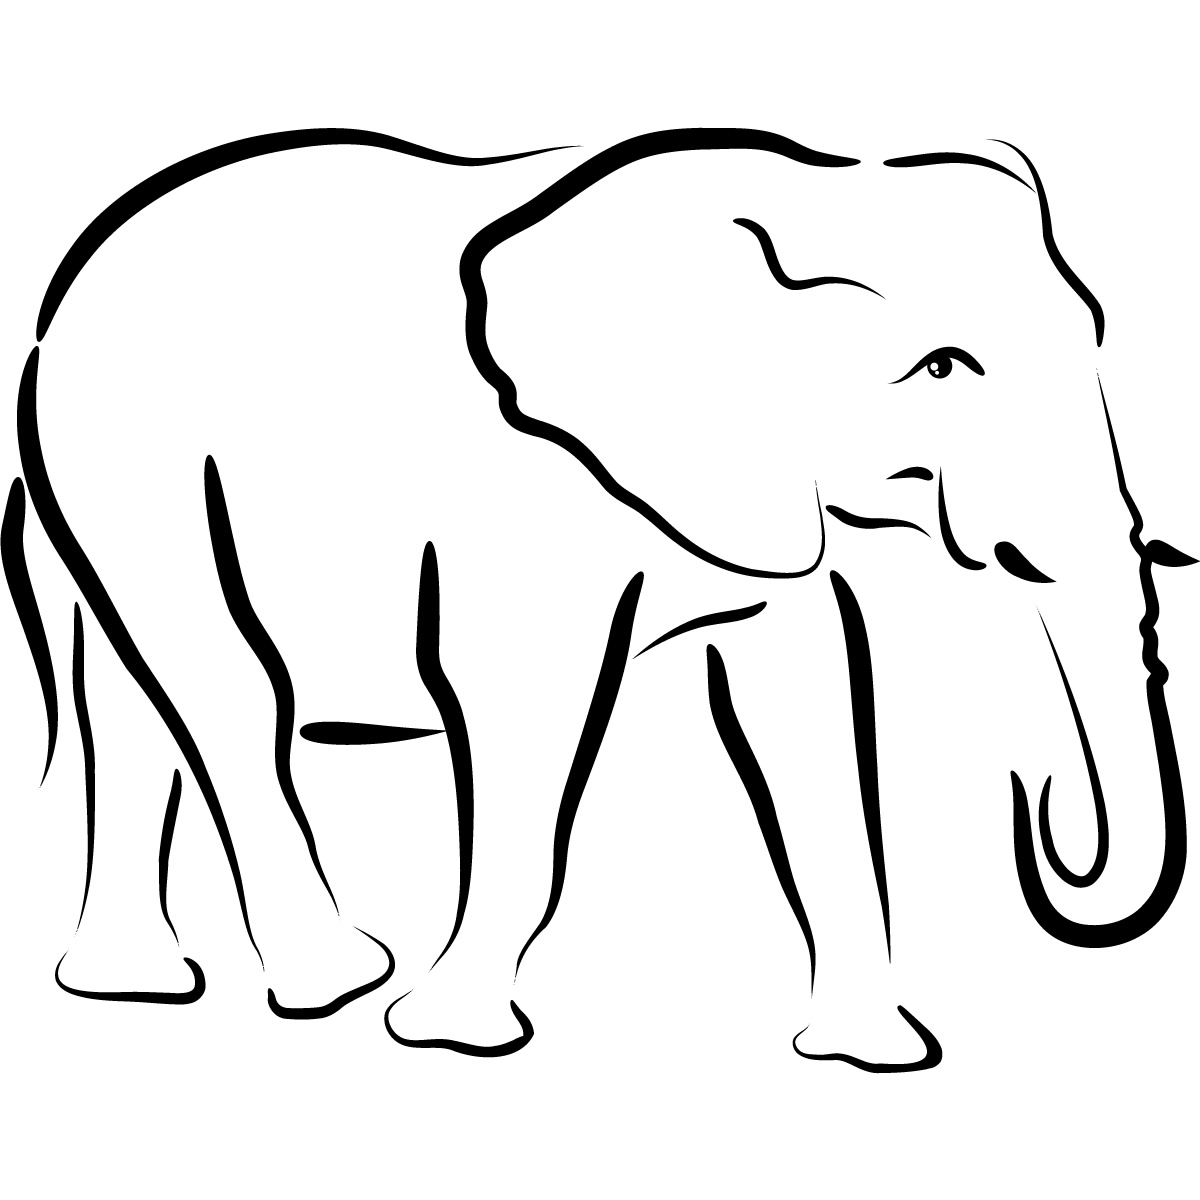 Outline download. Контуры животных. Слон трафарет. Контуры животных для детей. Трафареты животных для рисования.